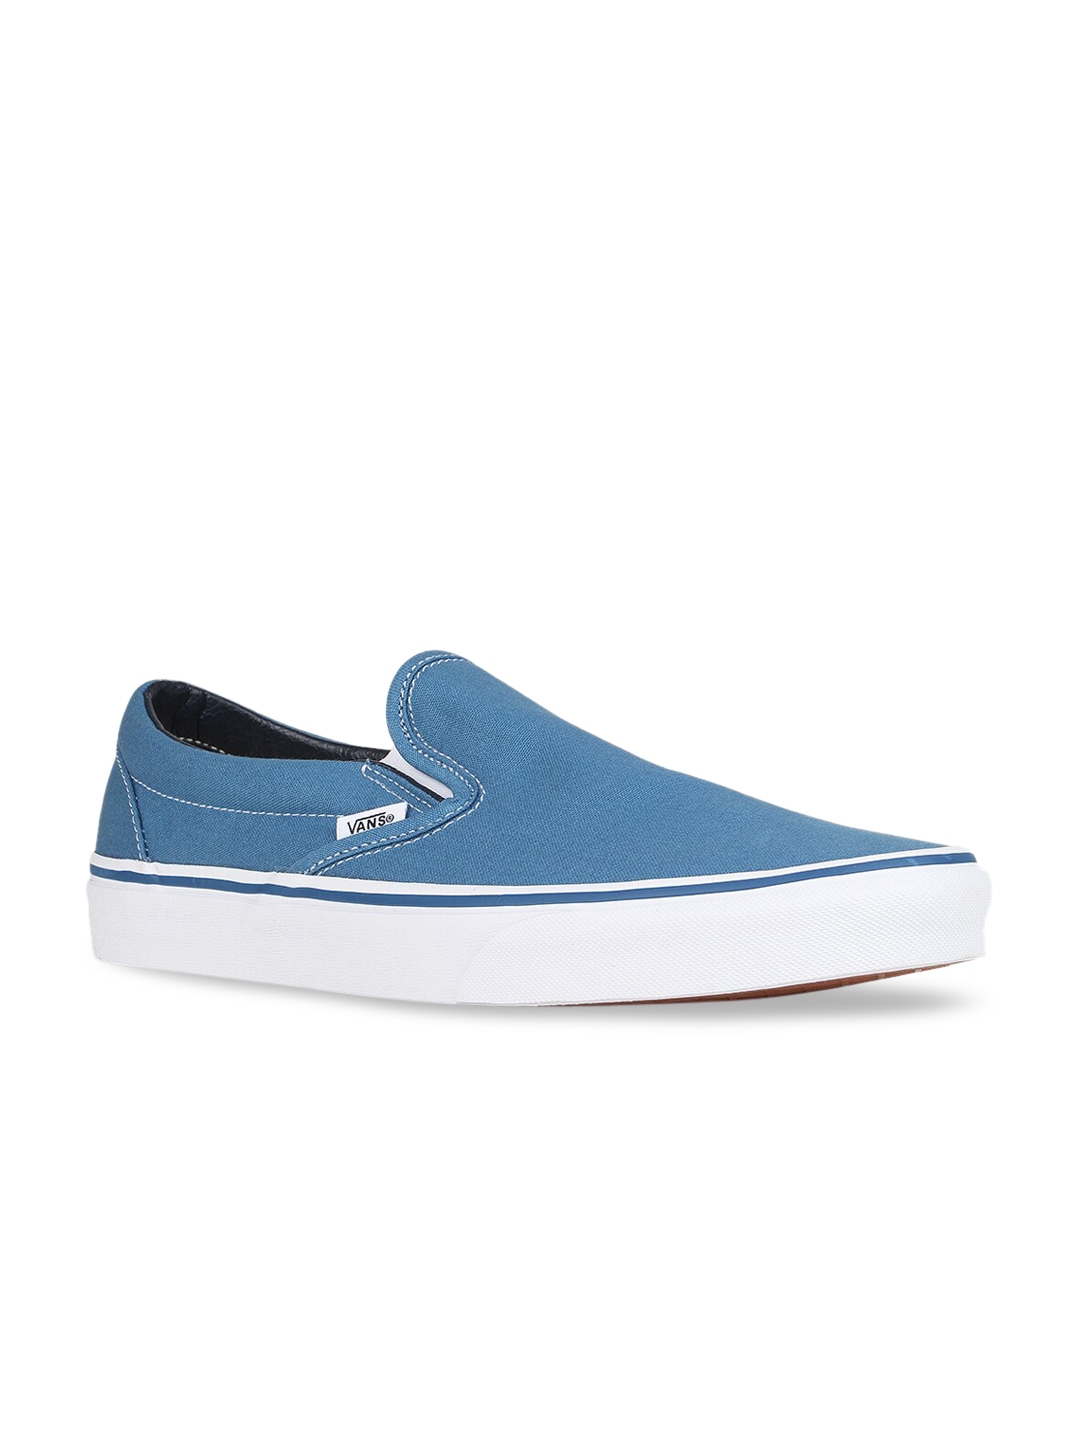 Buy Vans Unisex Blue Slip On Sneakers - Casual Shoes for Unisex ...